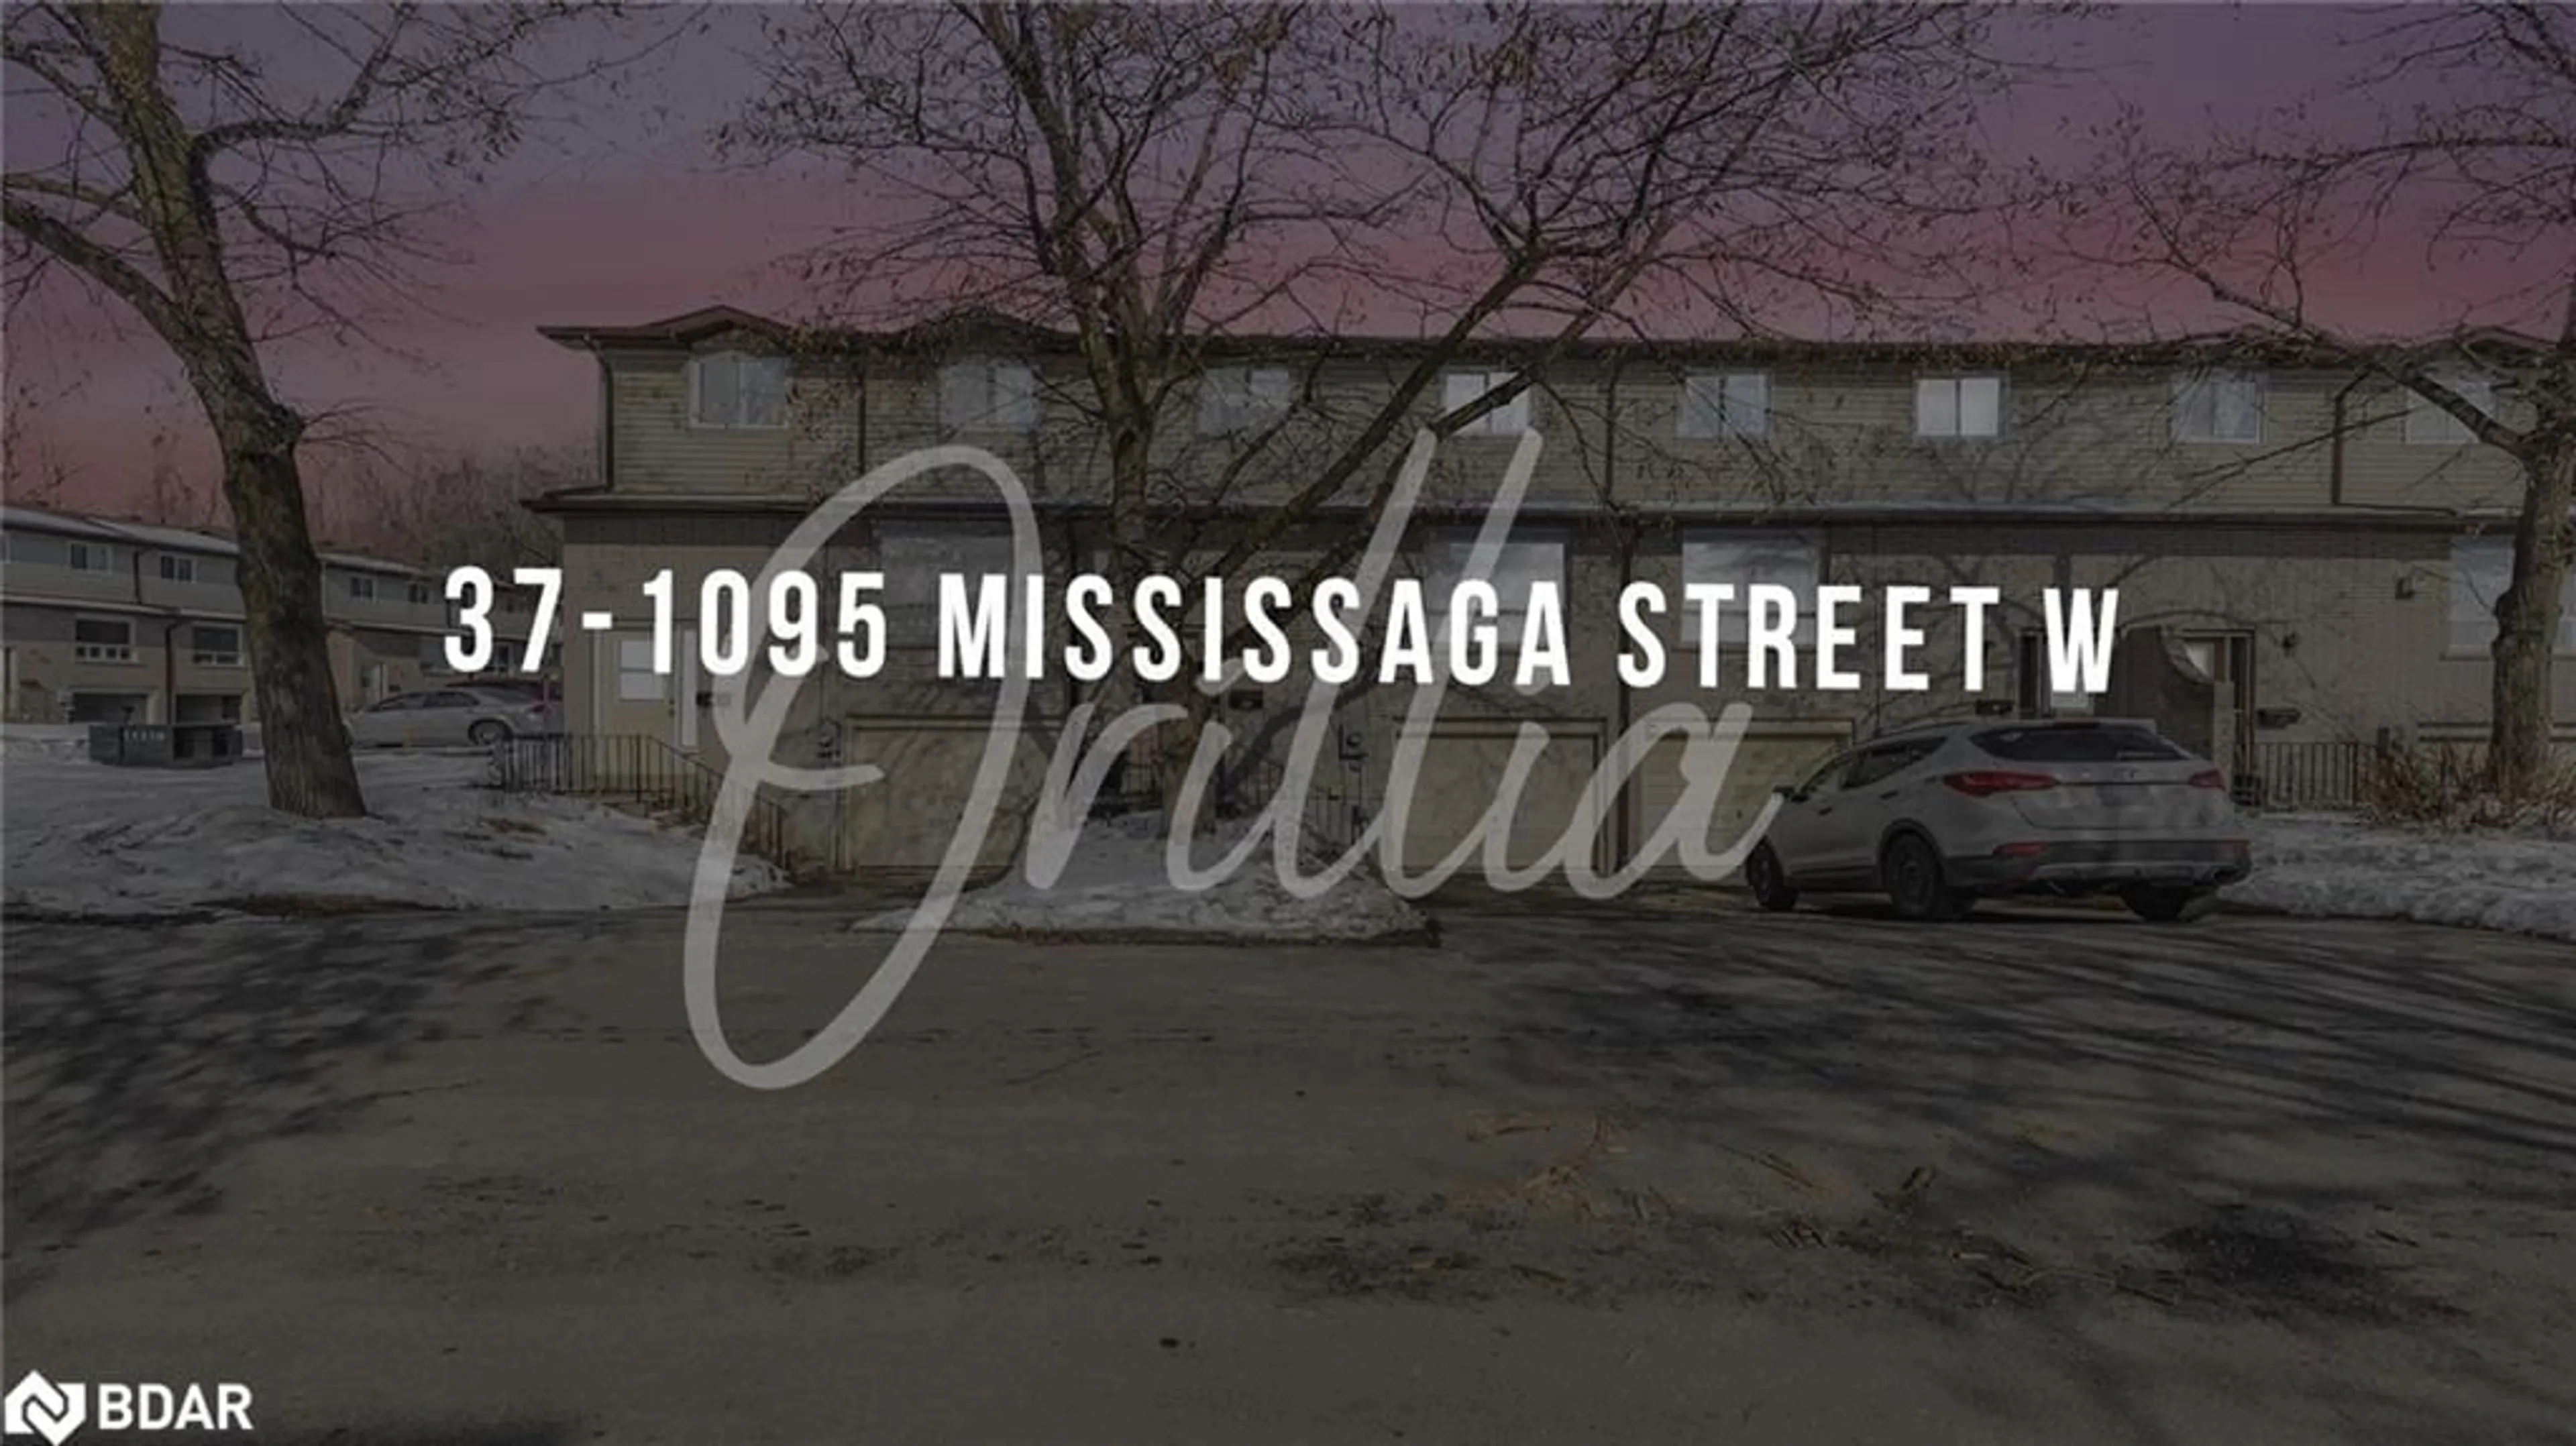 Street view for 1095 Mississaga St #37, Orillia Ontario L3V 6W7